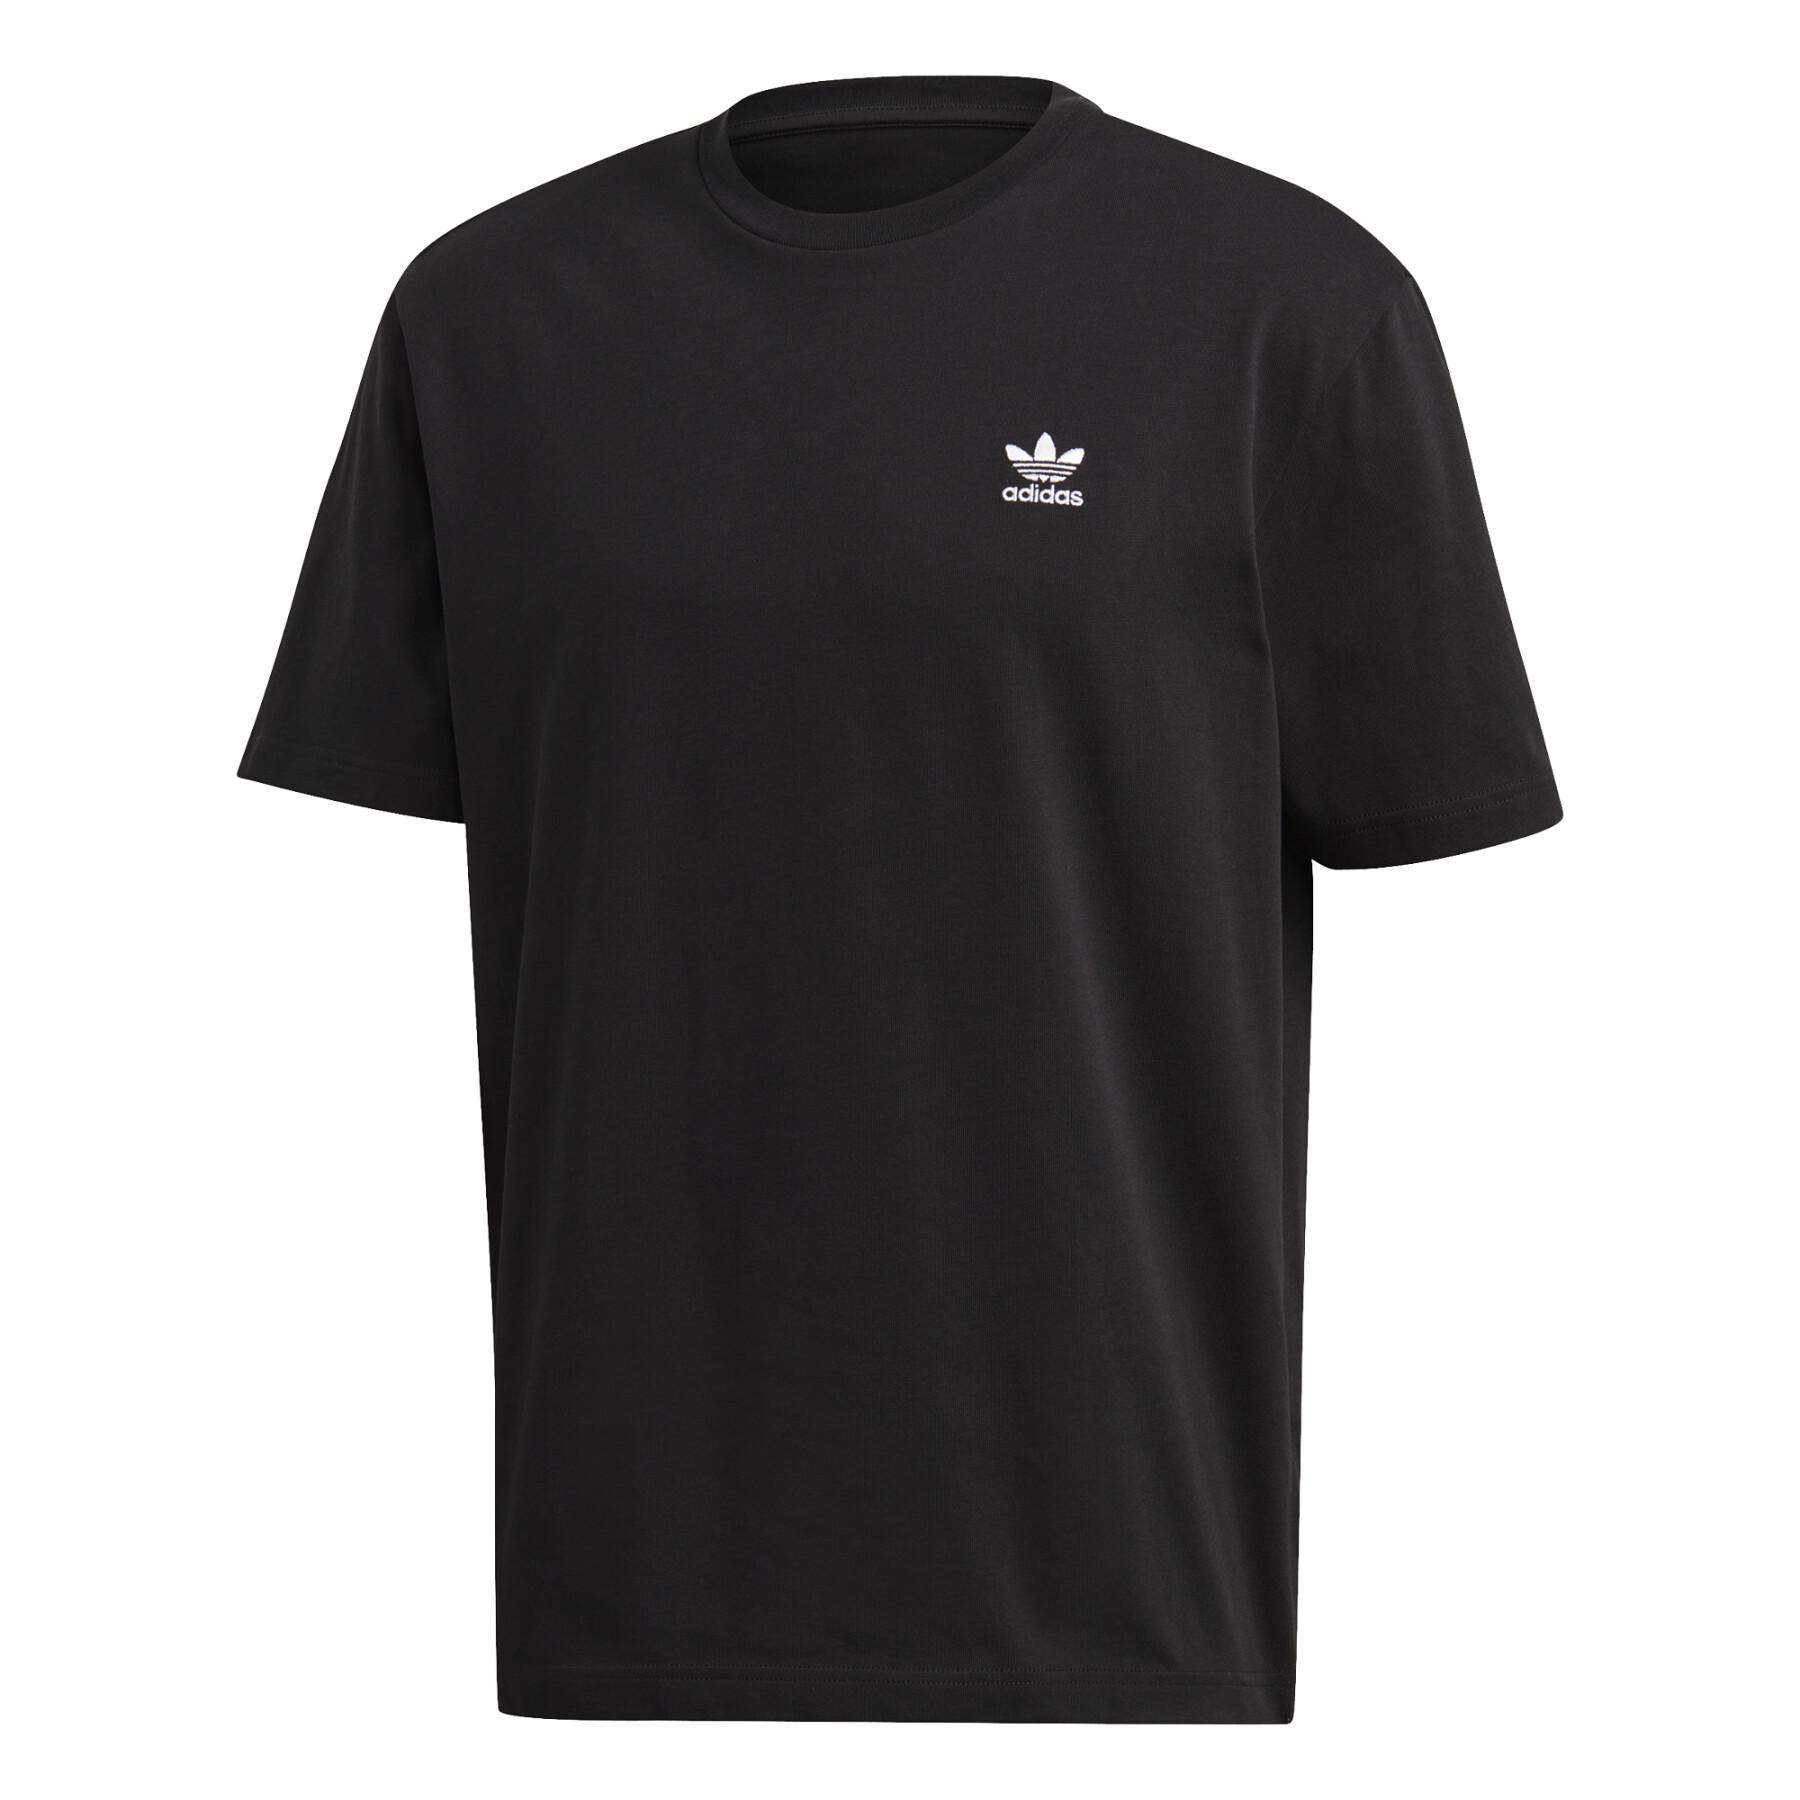 Camiseta adidas Originals Trefoil Boxywith Front and Back Print